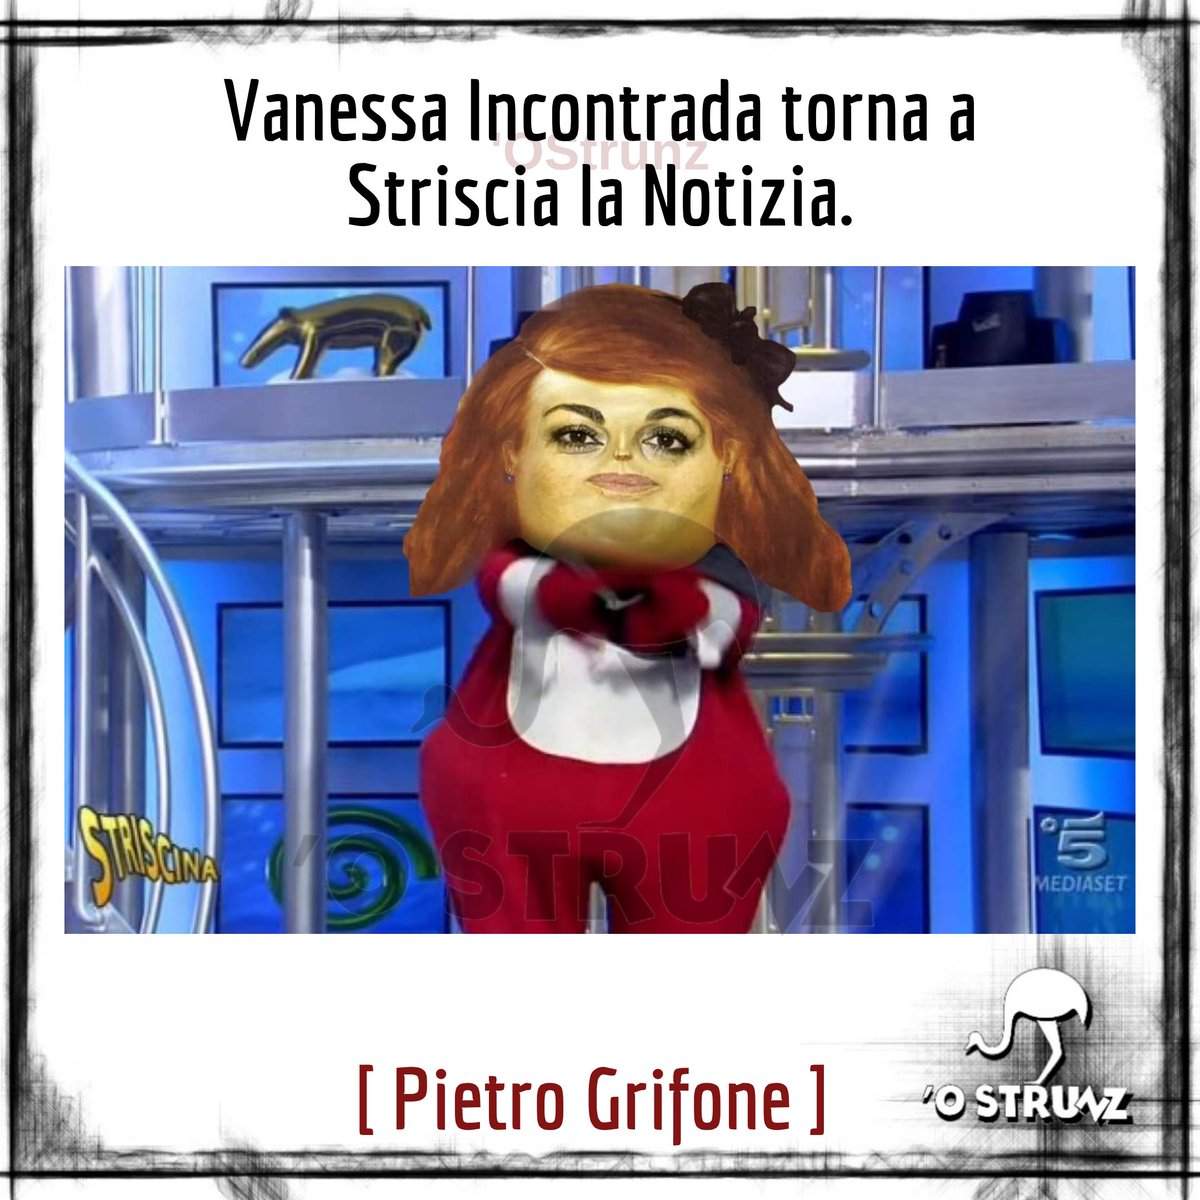 (#PietroGrifone)

#19settembre #VanessaIncontrada #bodyshaming #striscialanotizia